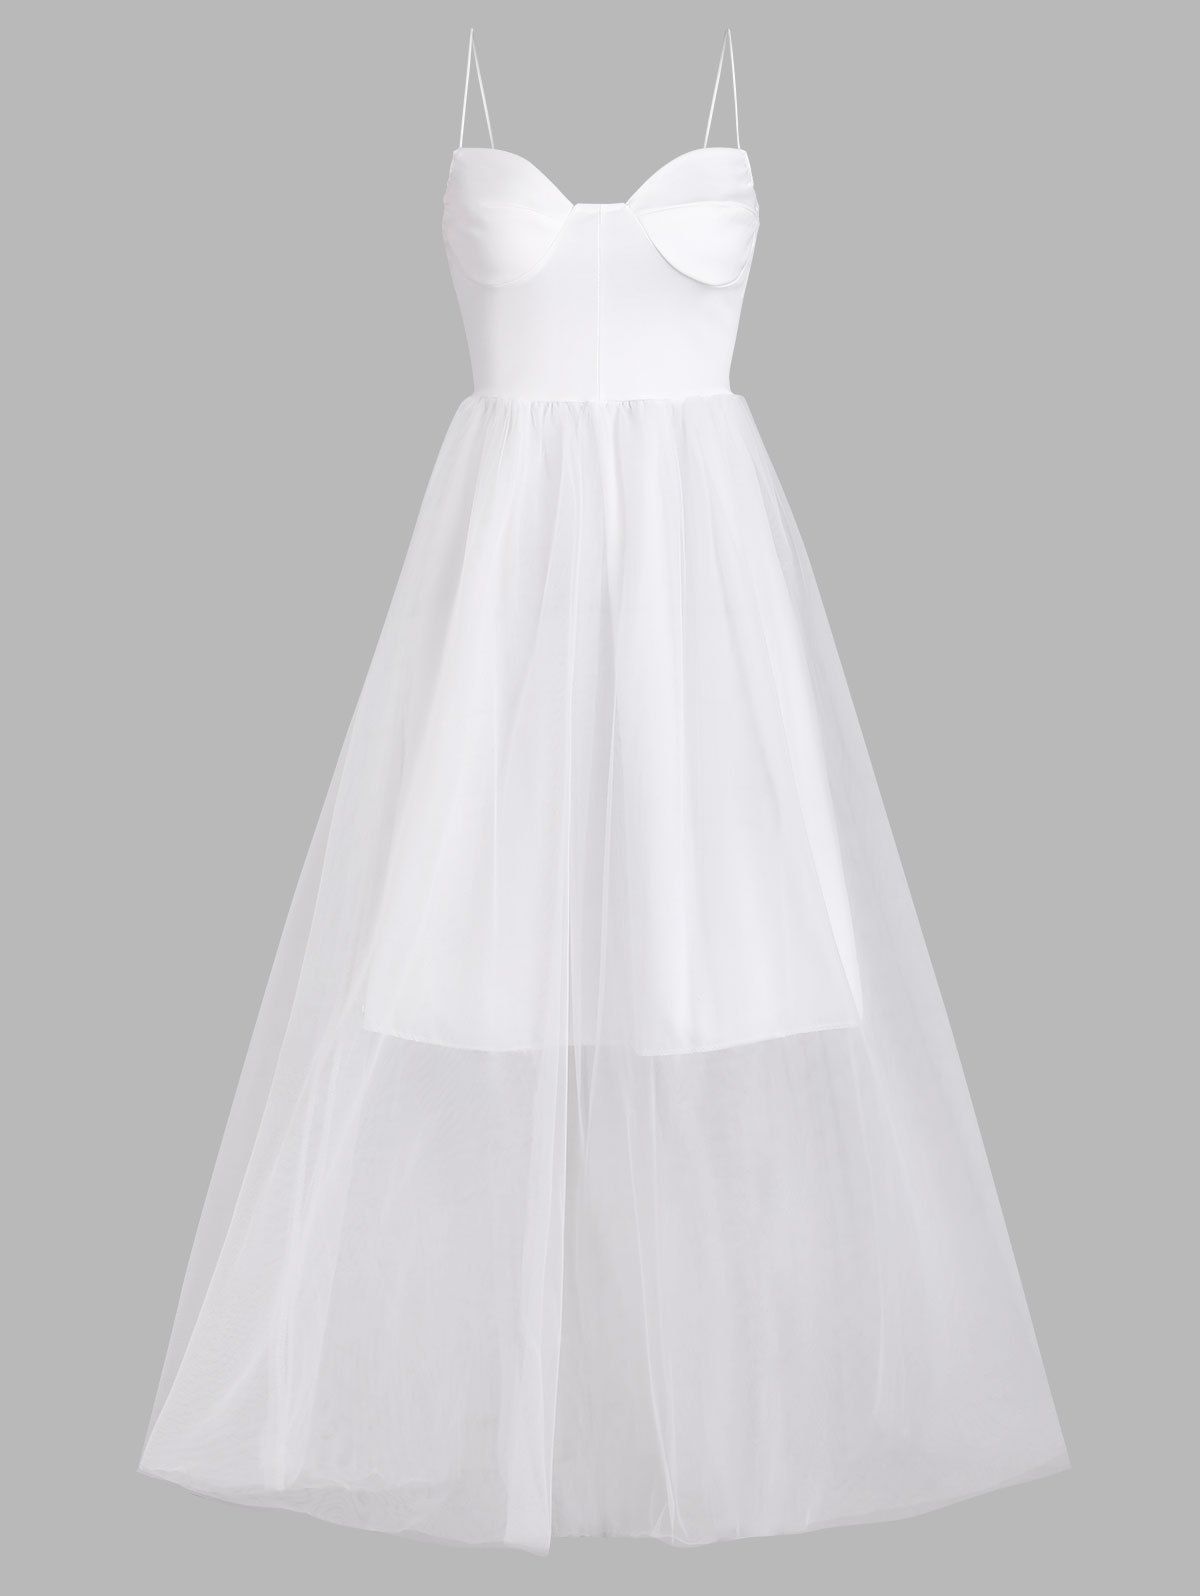 Croset Style Party Dress See Thru Tulle Mesh Overlay Midi Dress Spaghetti Strap Cupped Dress - WHITE XL